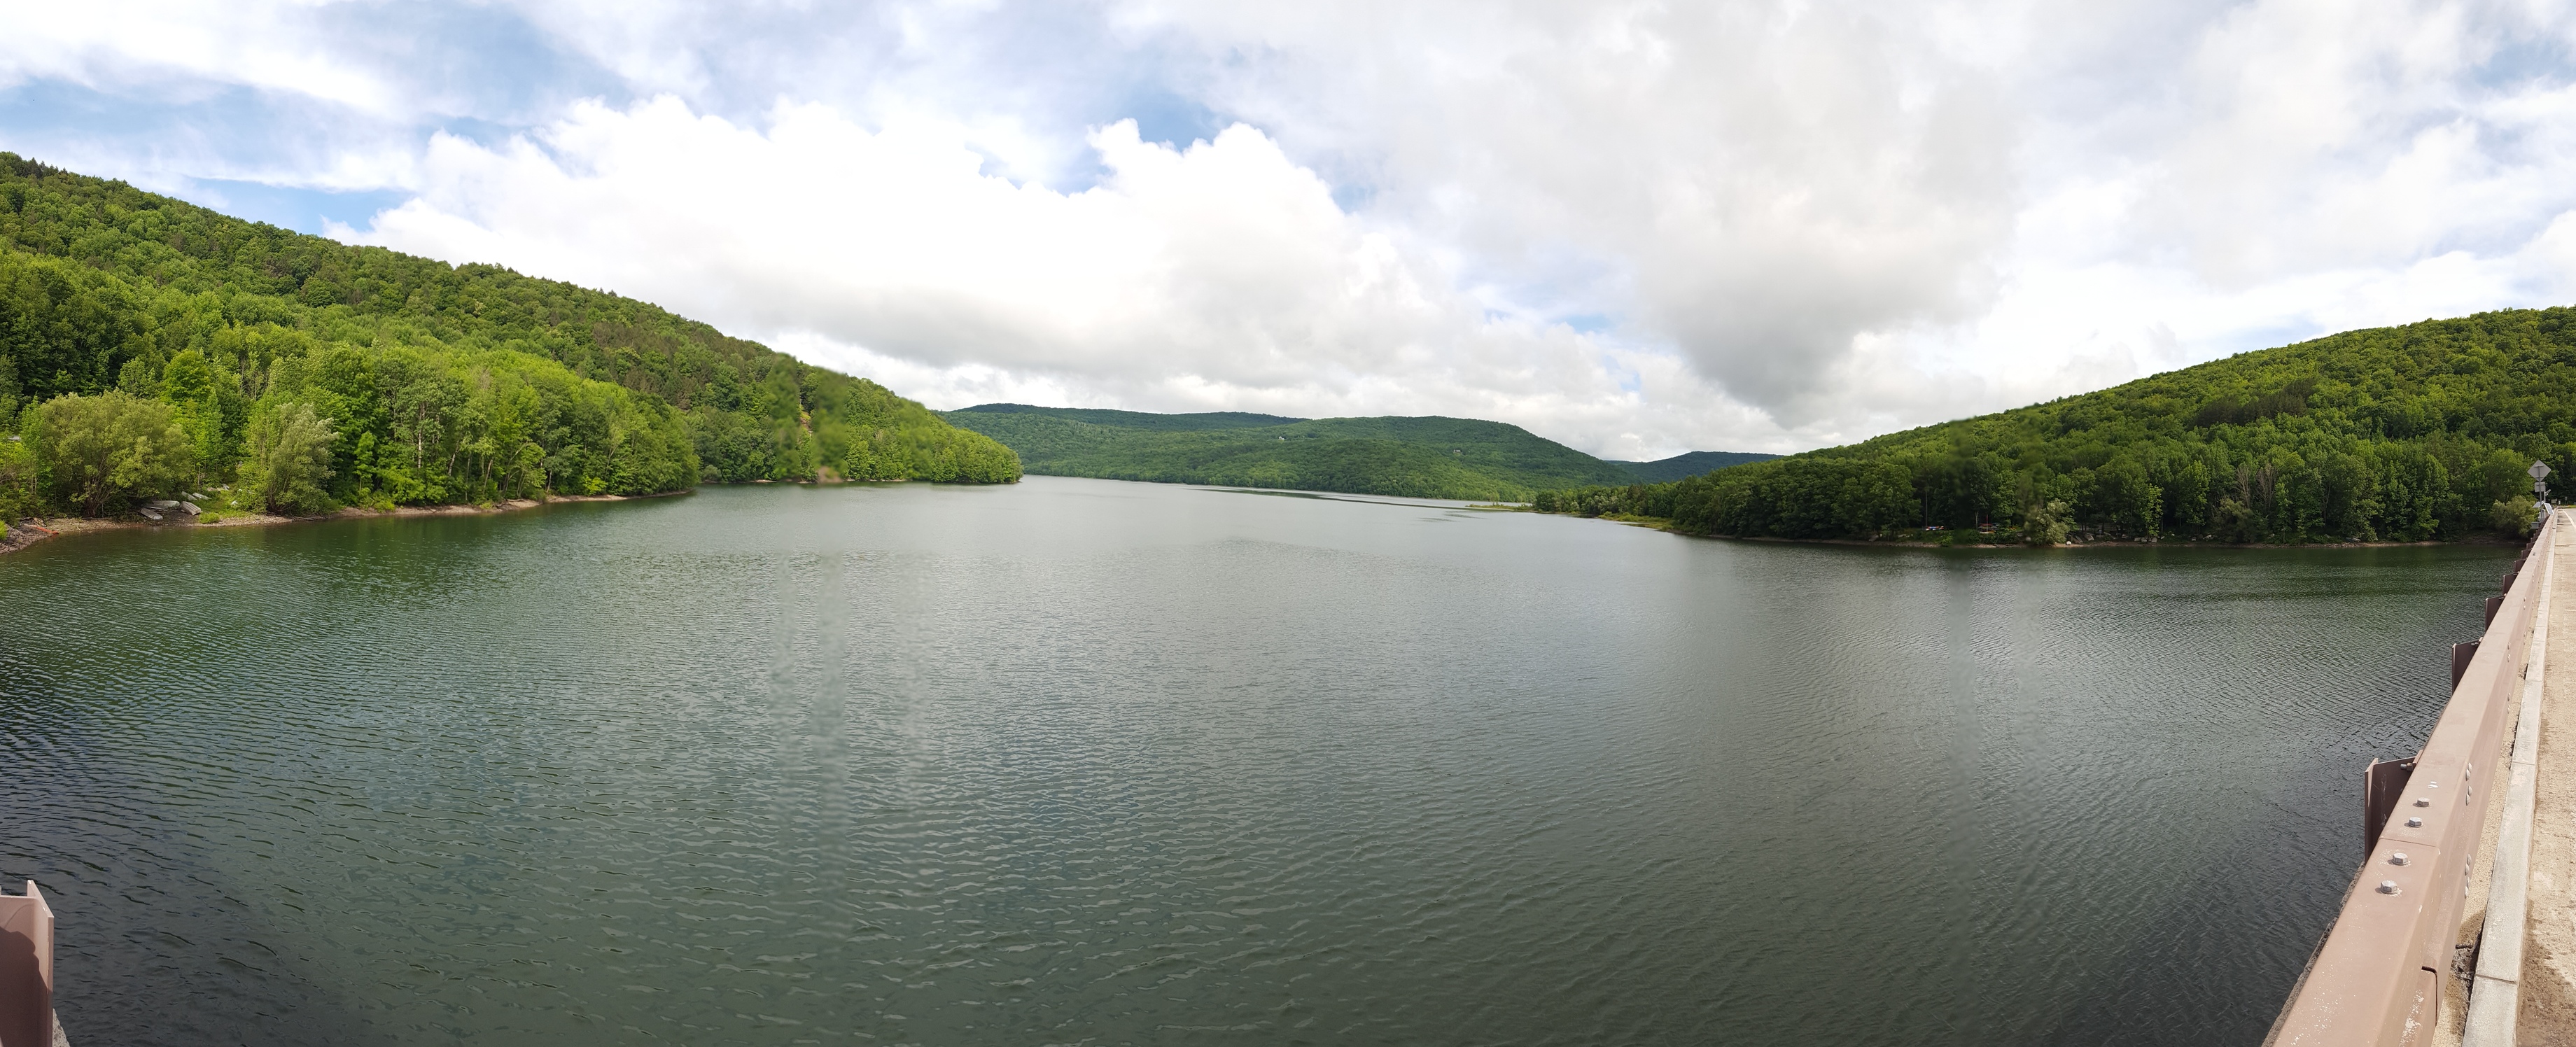 Pepactin Reservoir